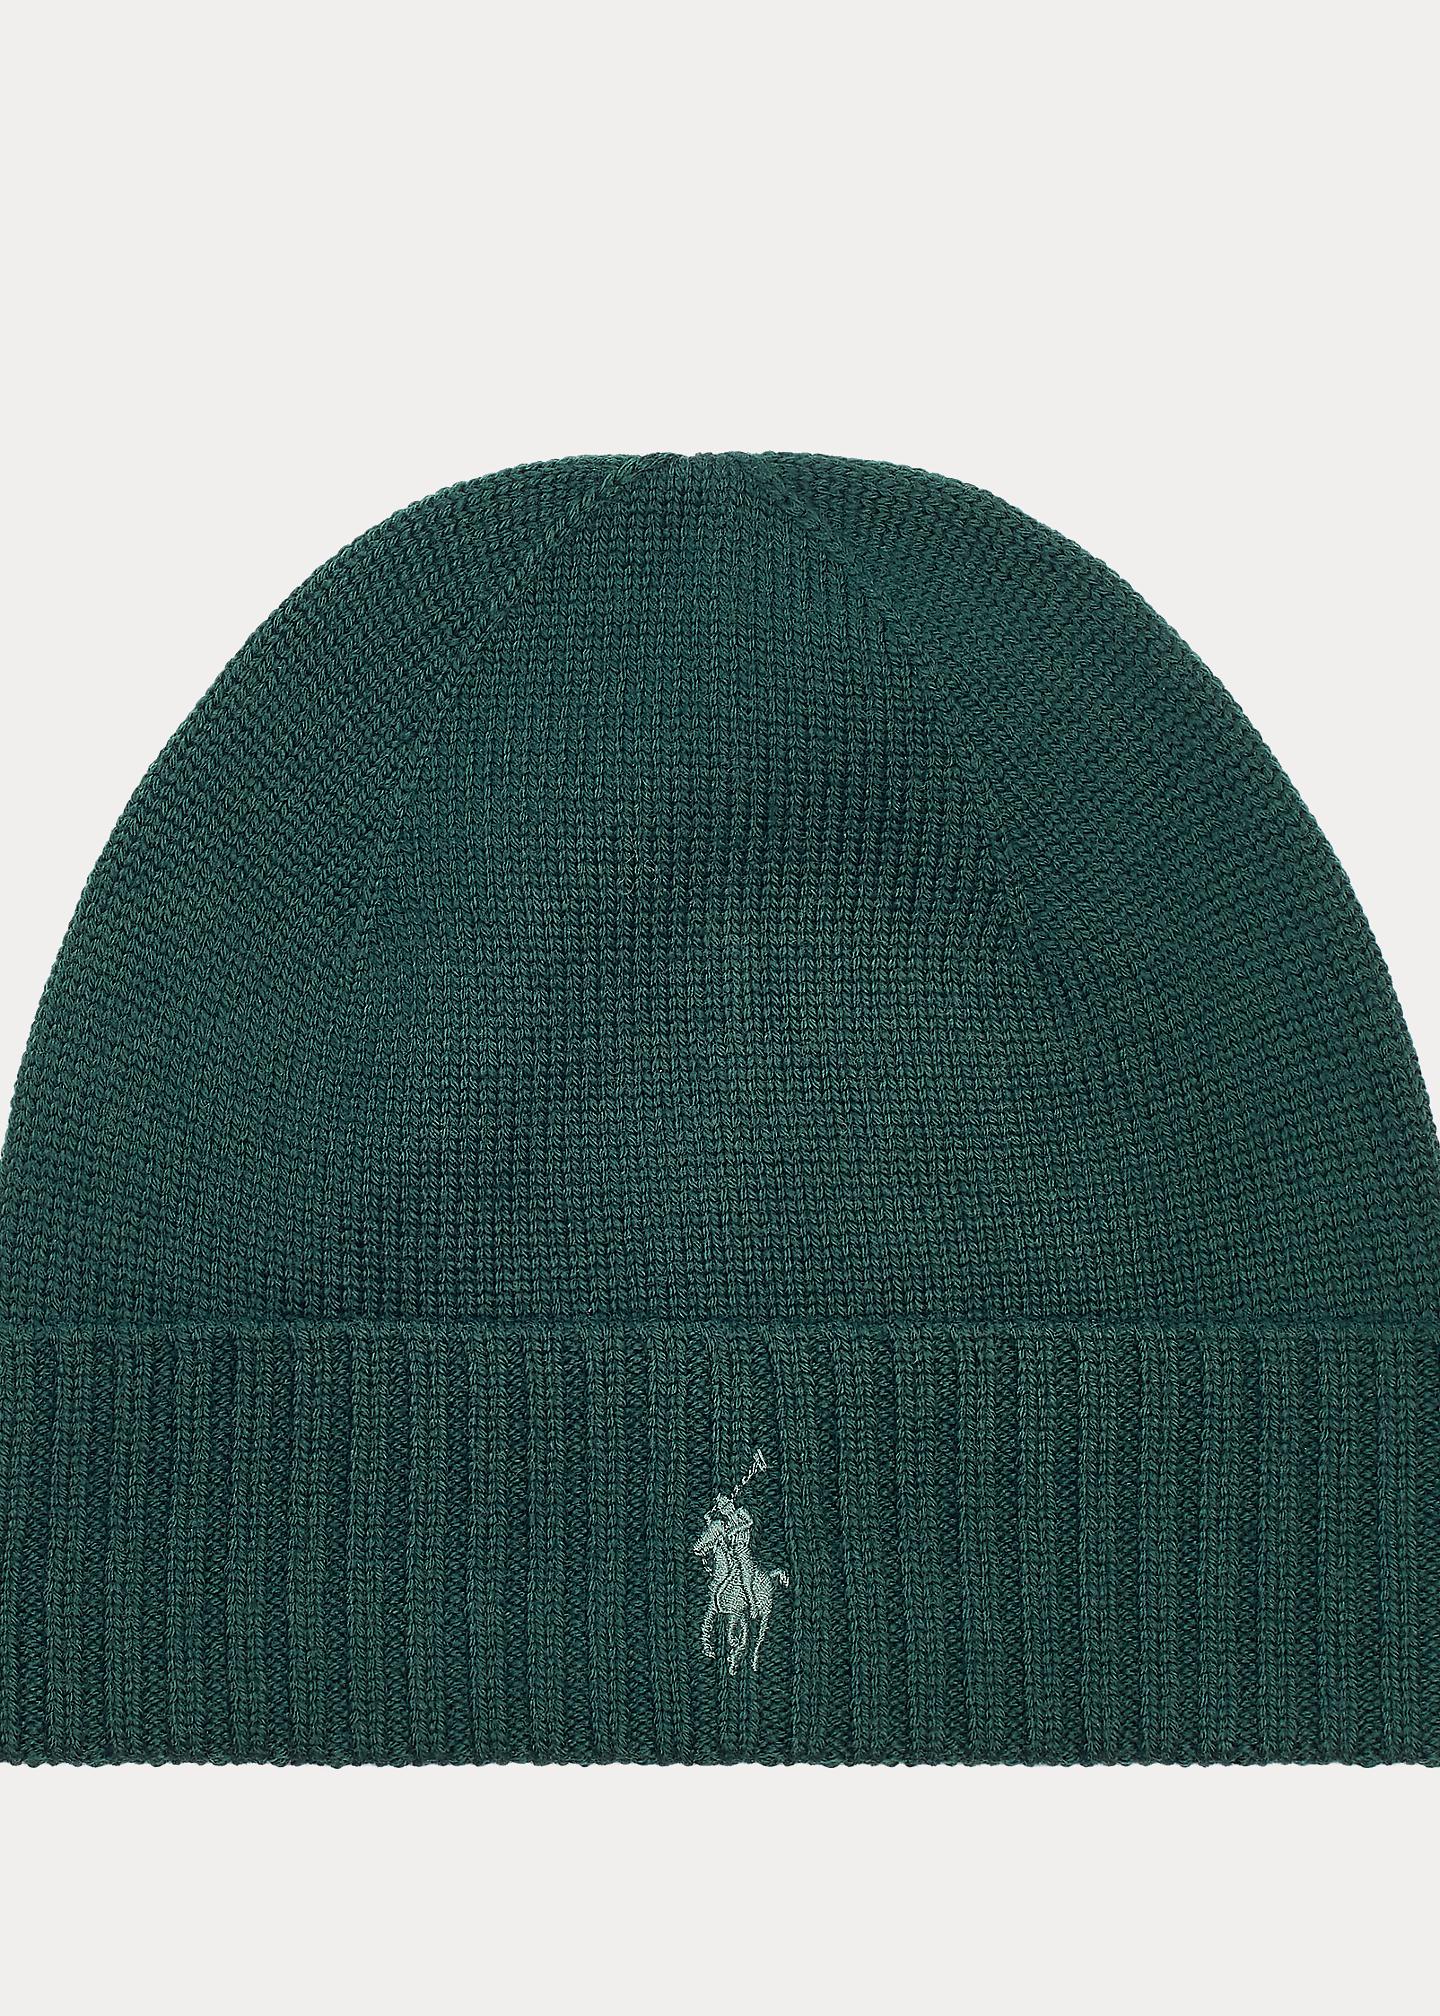 Polo Ralph Lauren Wool Signature Pony Hat in Green for Men - Lyst